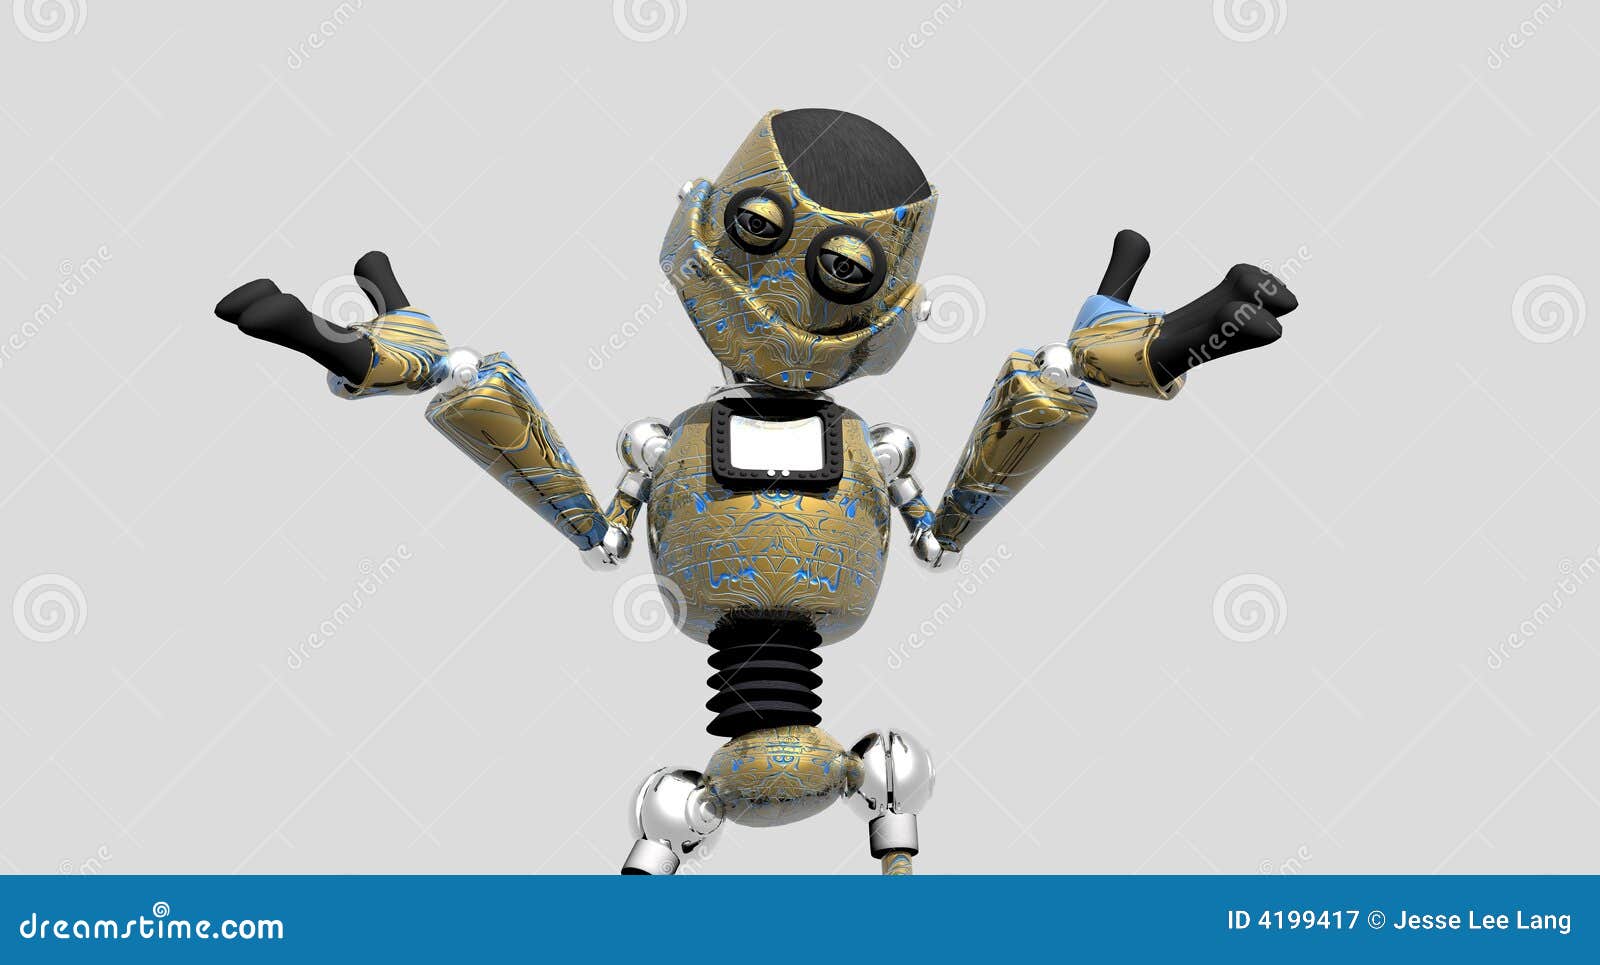 robot stock illustration. Illustration of technology - 4199417